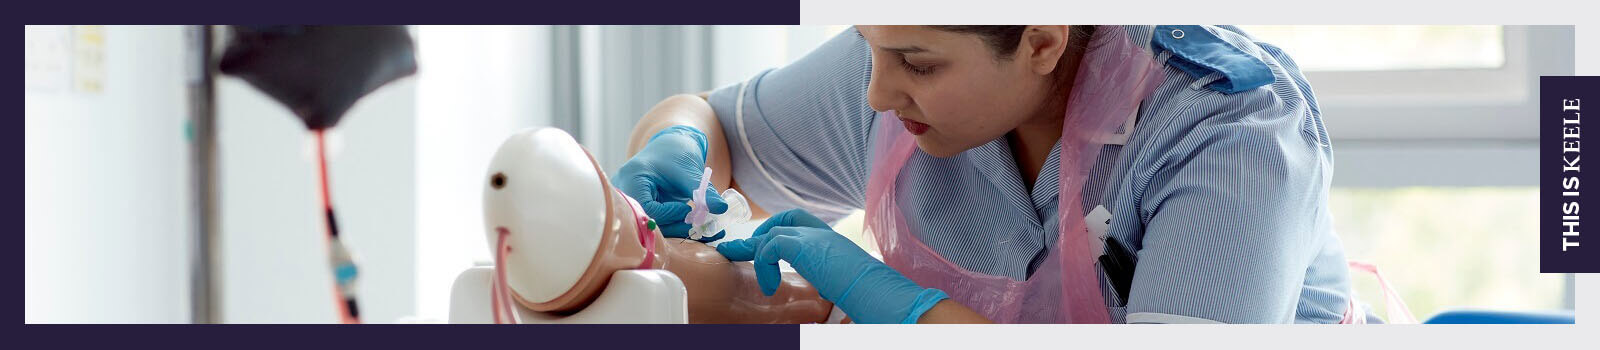 Student nurse practicing taking blood on dummy arm 